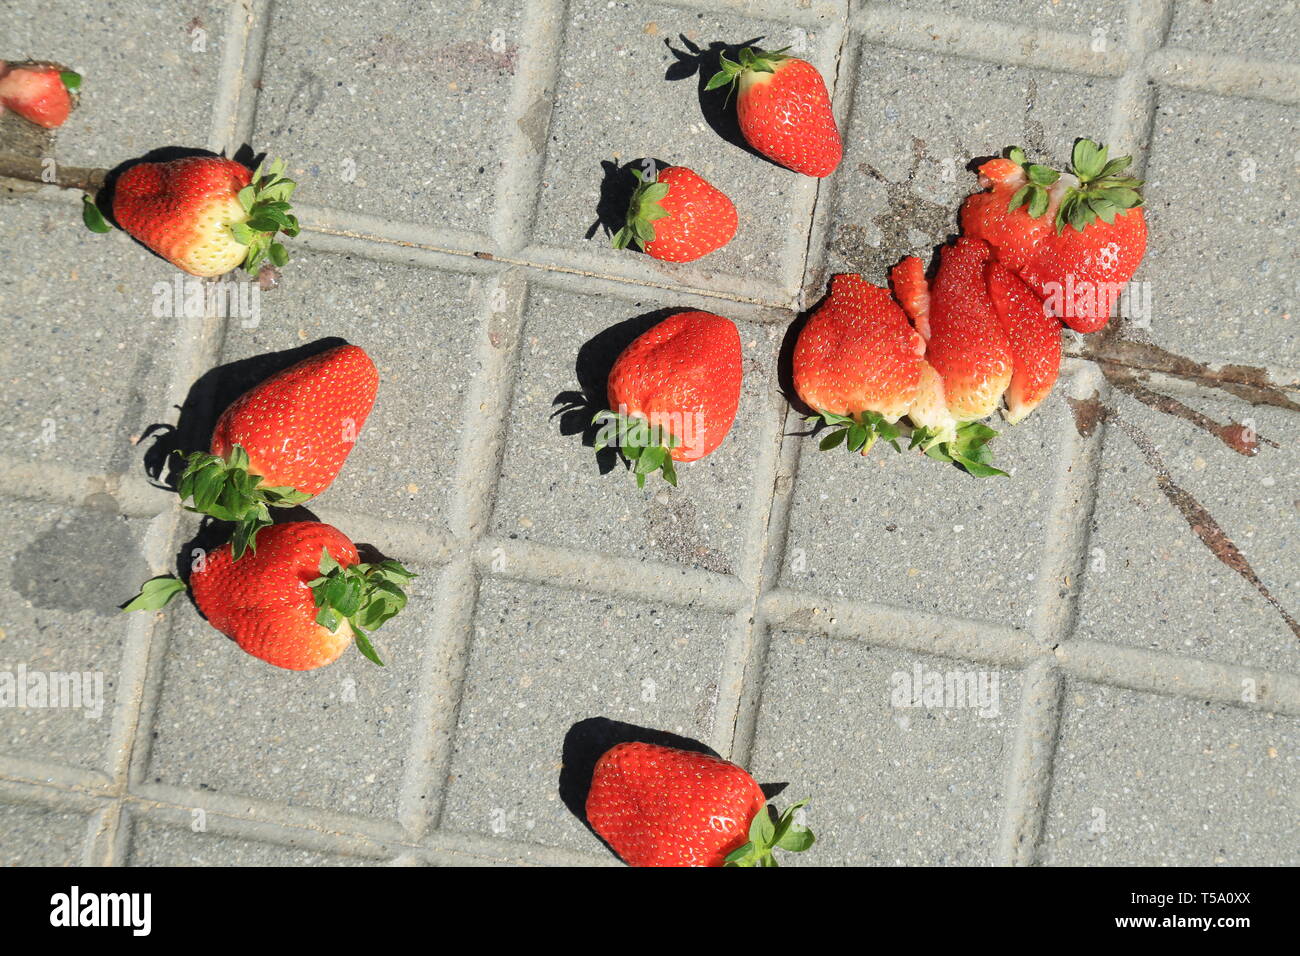 Red ripe smashed strawberries on grey concrete paving slab. Stock Photo